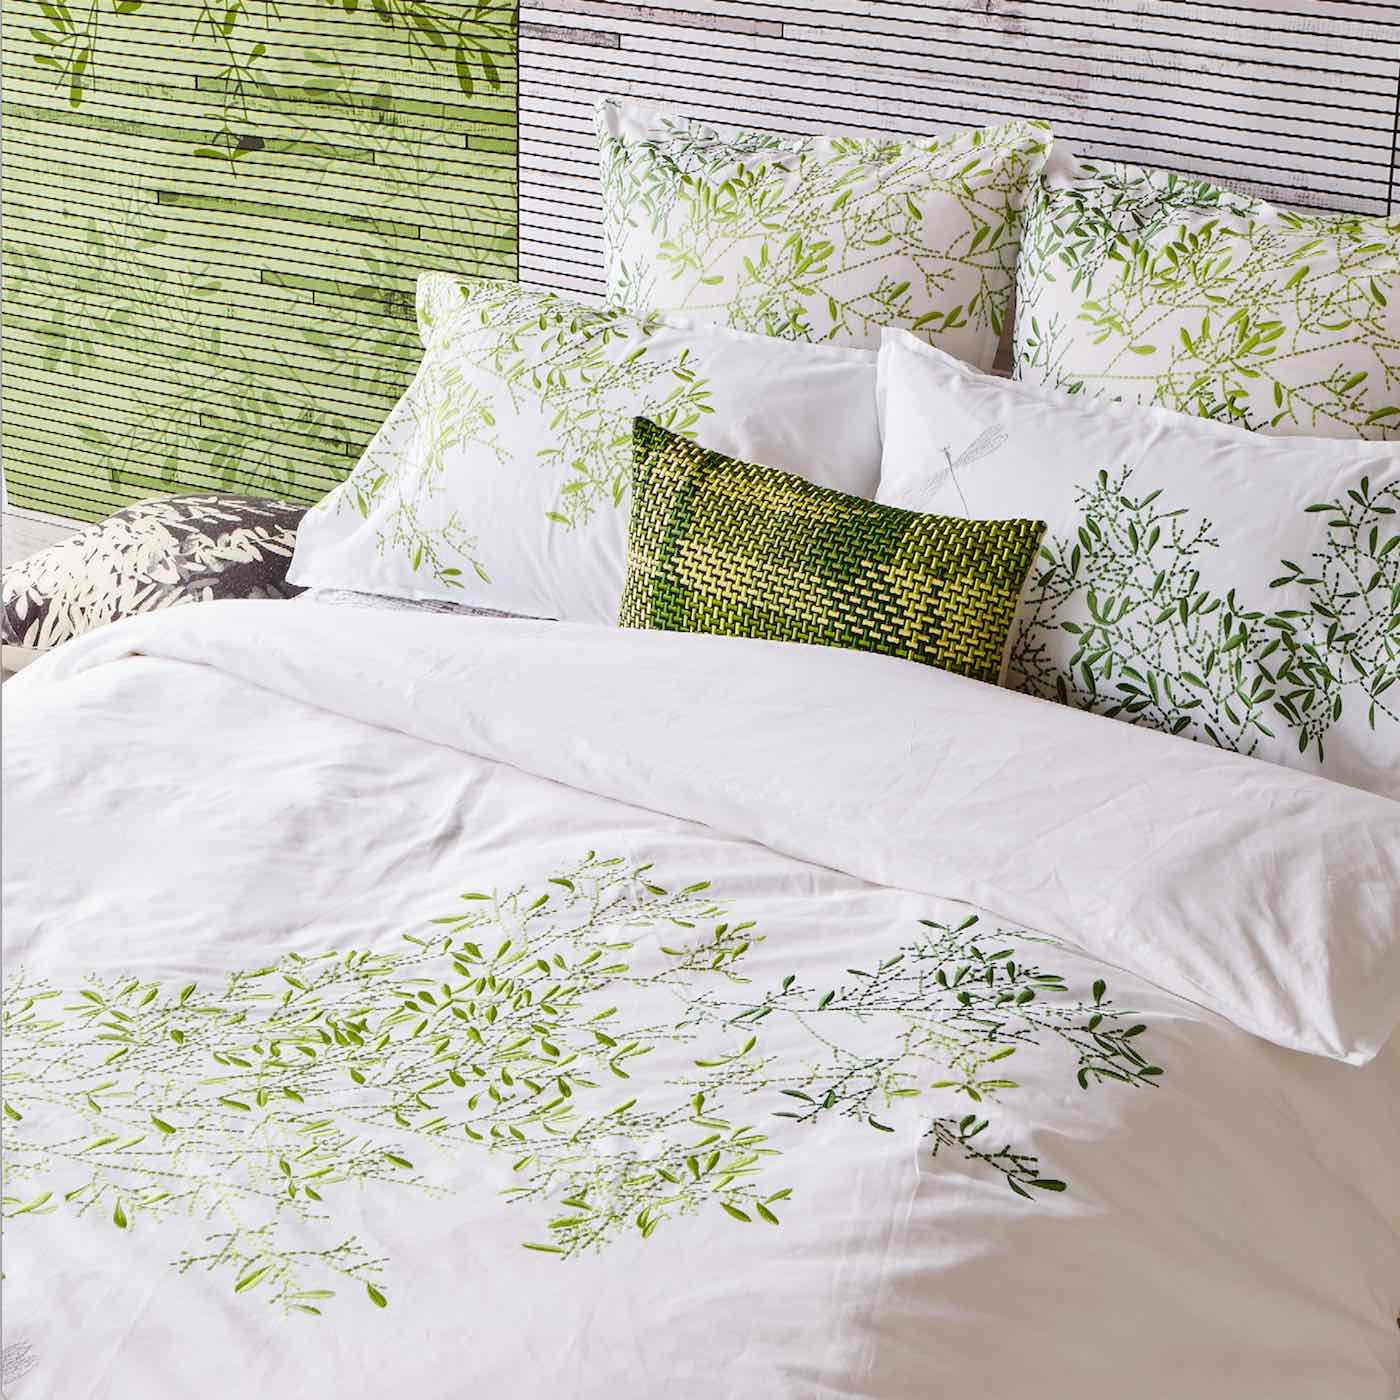 Luxotic Green Pascale Cotton Percale, Cotton Percale Duvet Cover Set